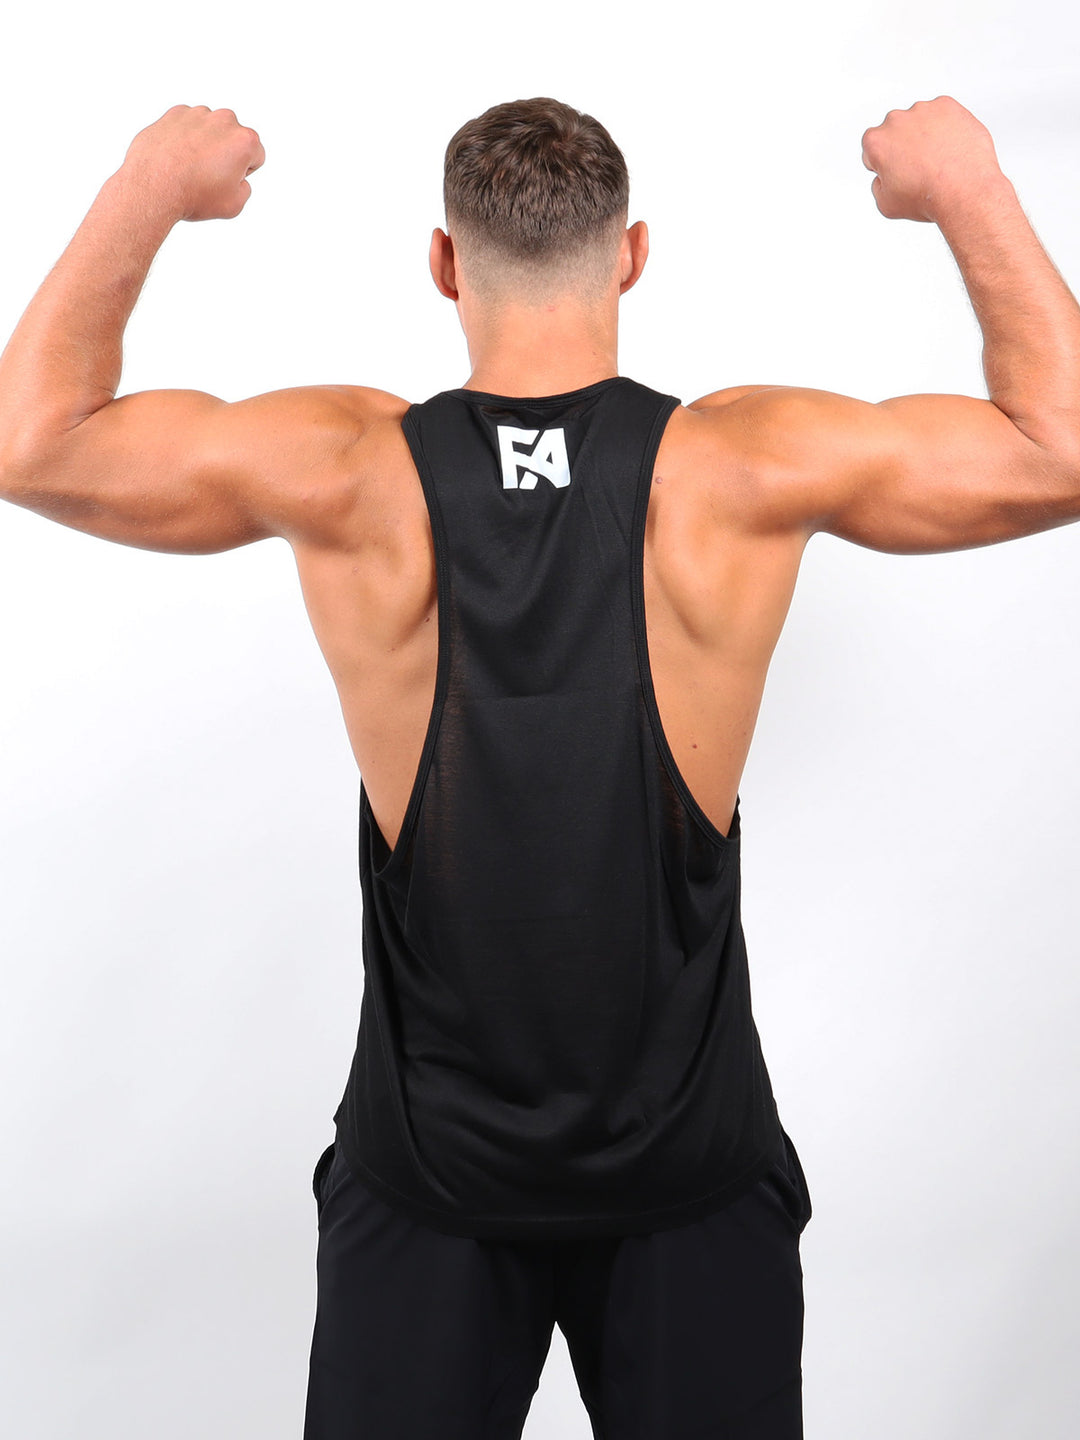 FA Zeus - Muscle Shirt - Unisex